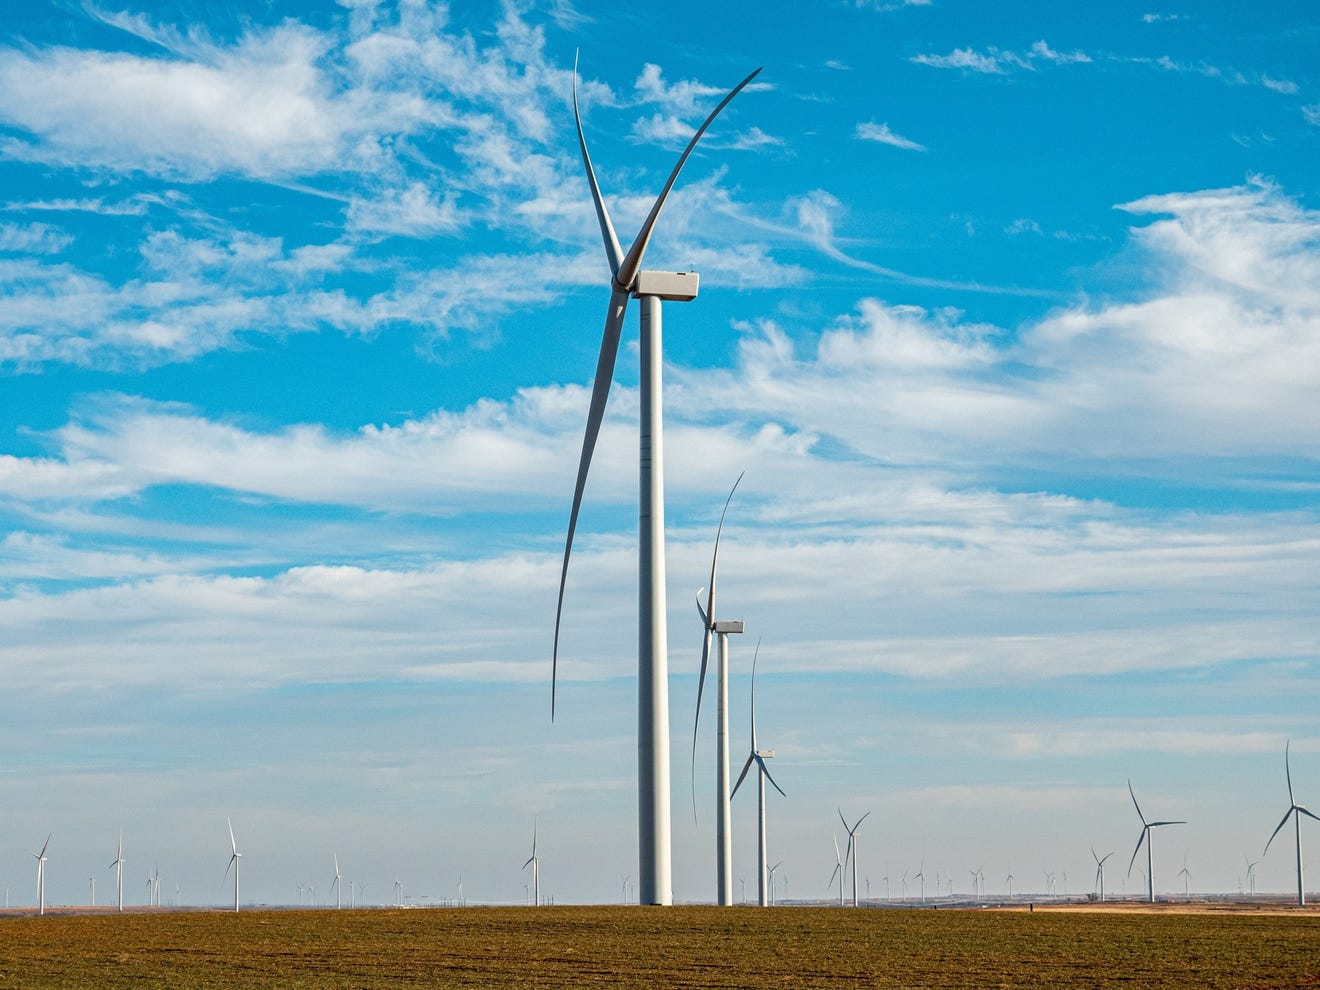 aep-opens-final-phase-of-massive-oklahoma-wind-farm